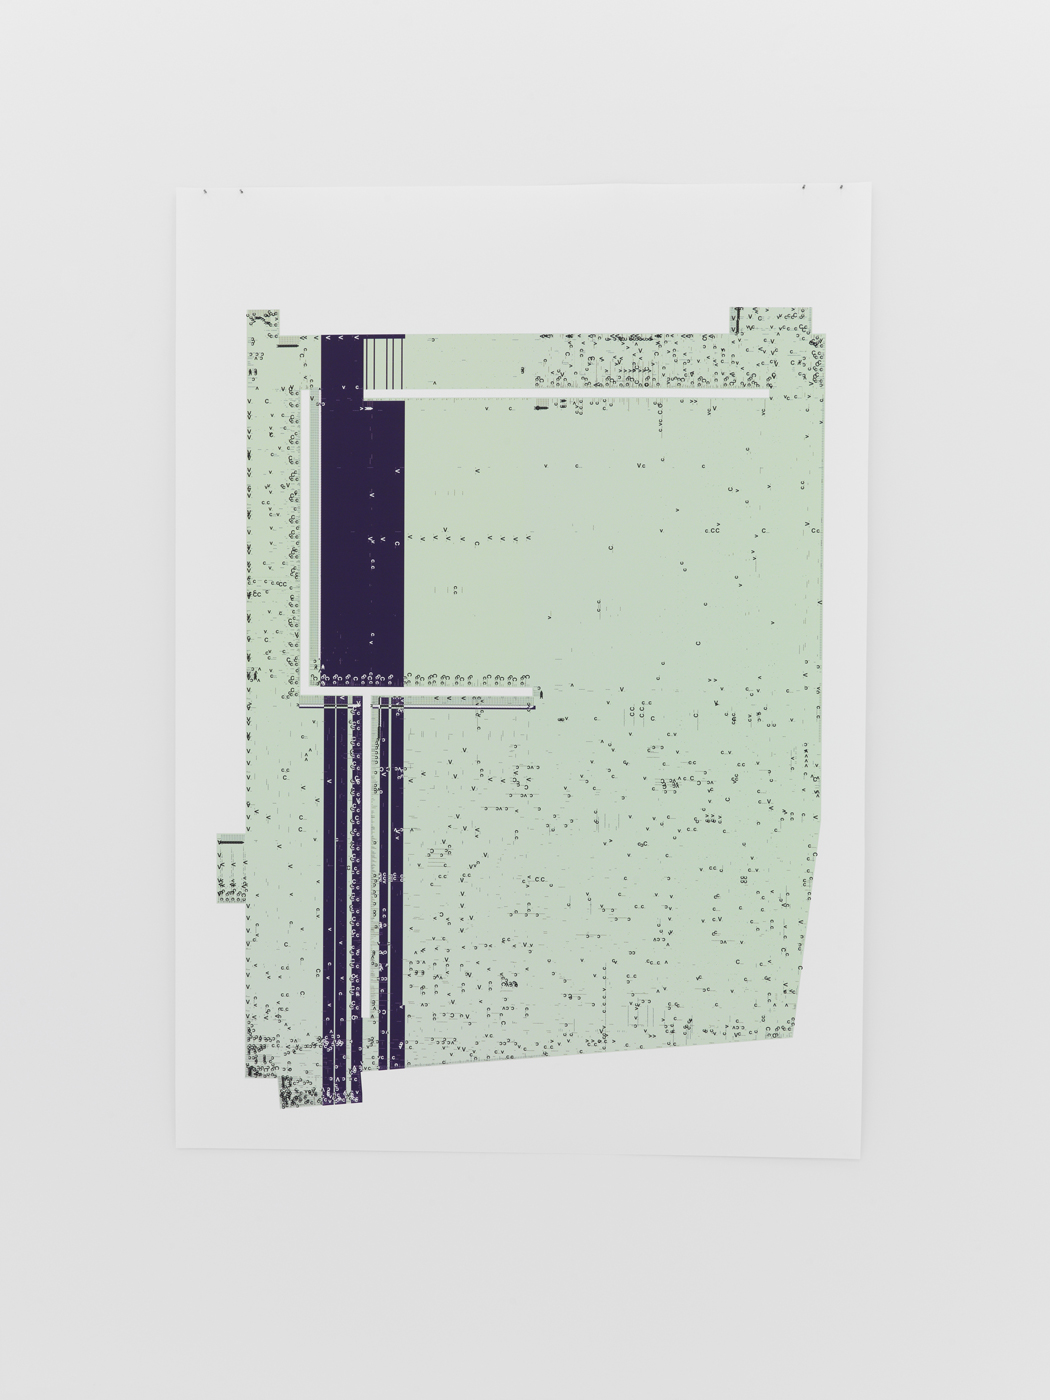 Untitled (Select_CV Floor Plan of Kunsthalle Zurich; light green), Michael Riedel